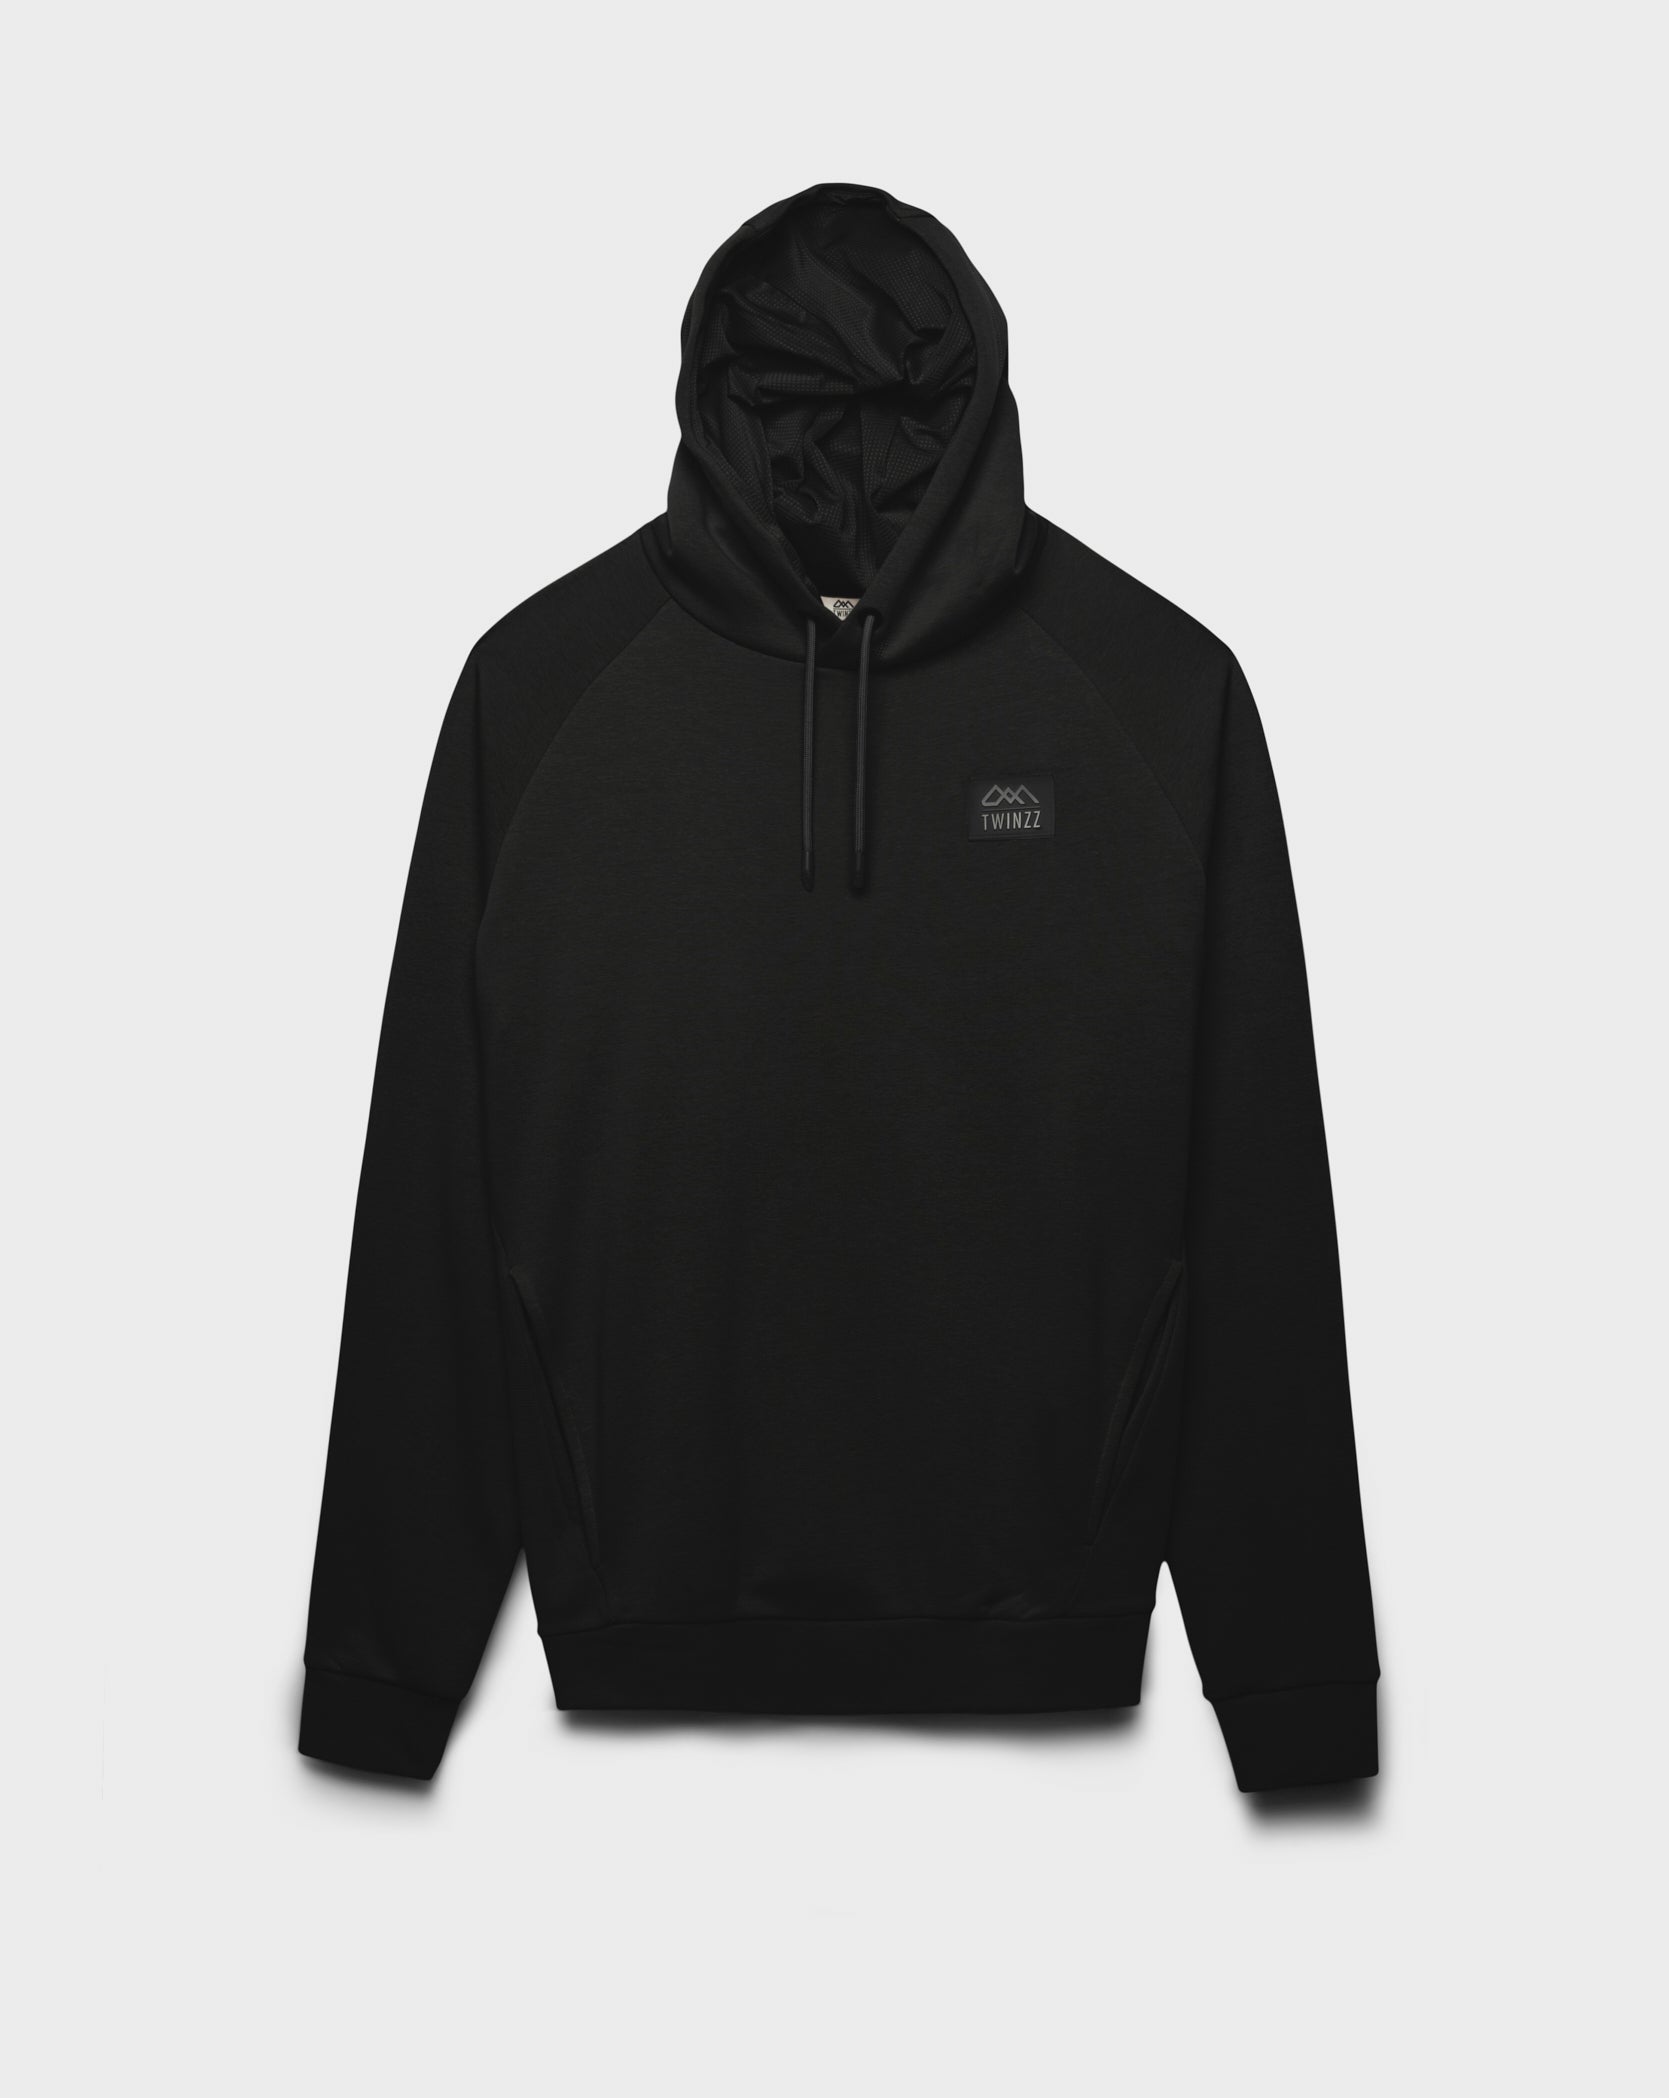 Twinzz black lifestyle hoodie